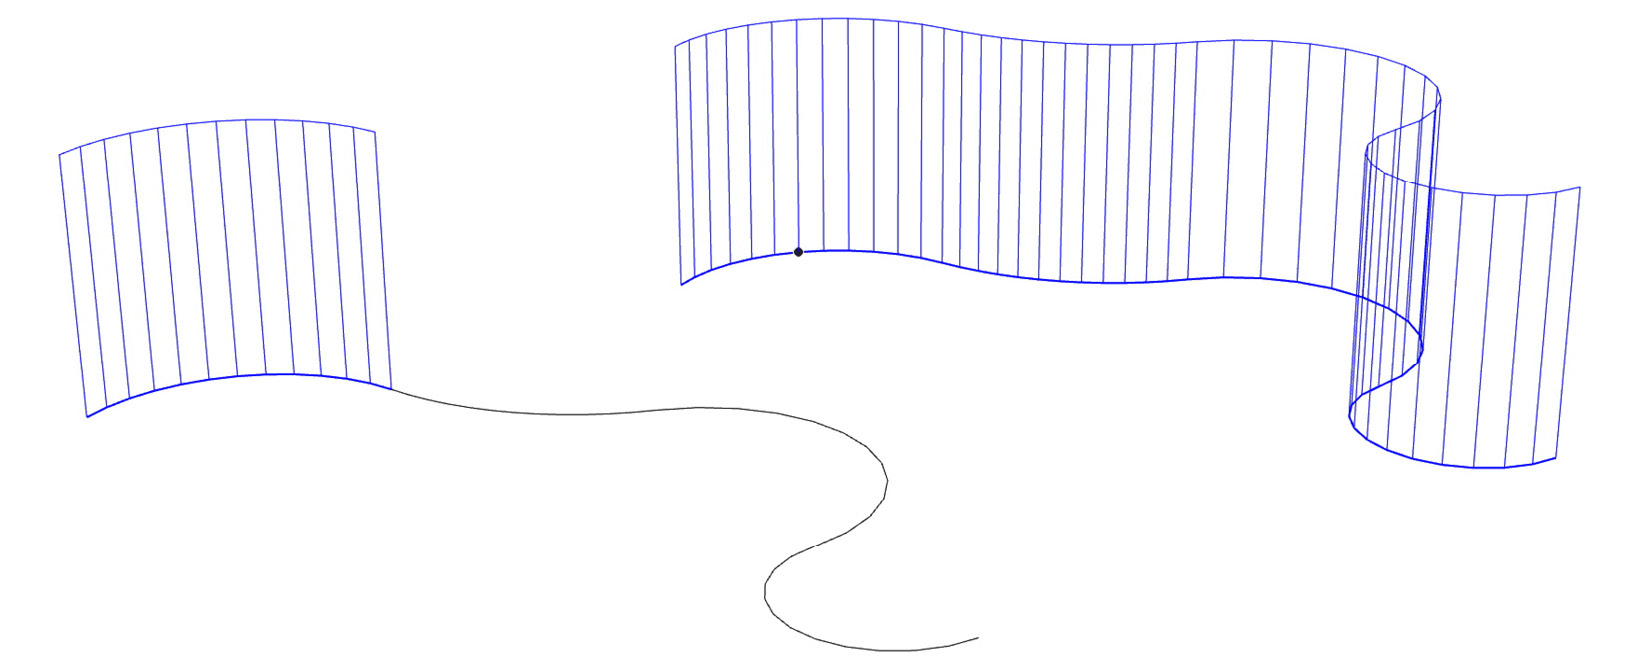 Figure 13.27– Pulling a single arc versus an entire curve
